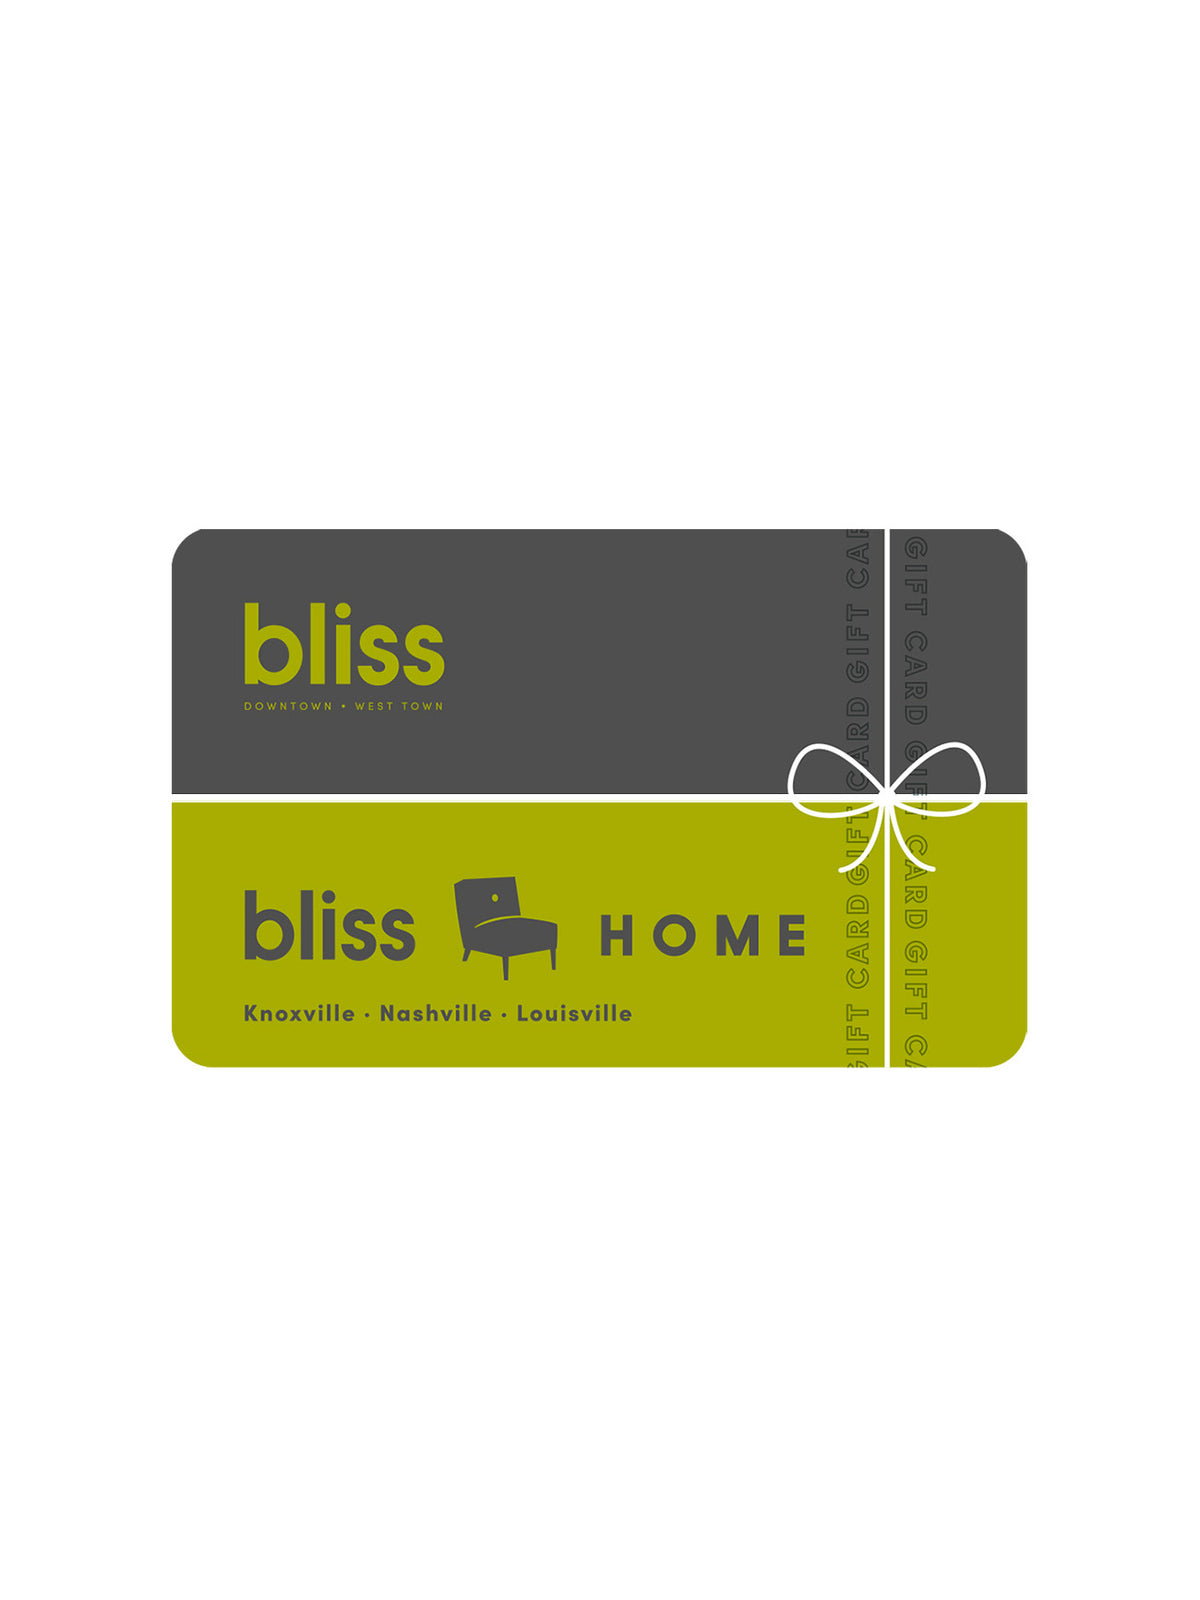 bliss $50 gift card